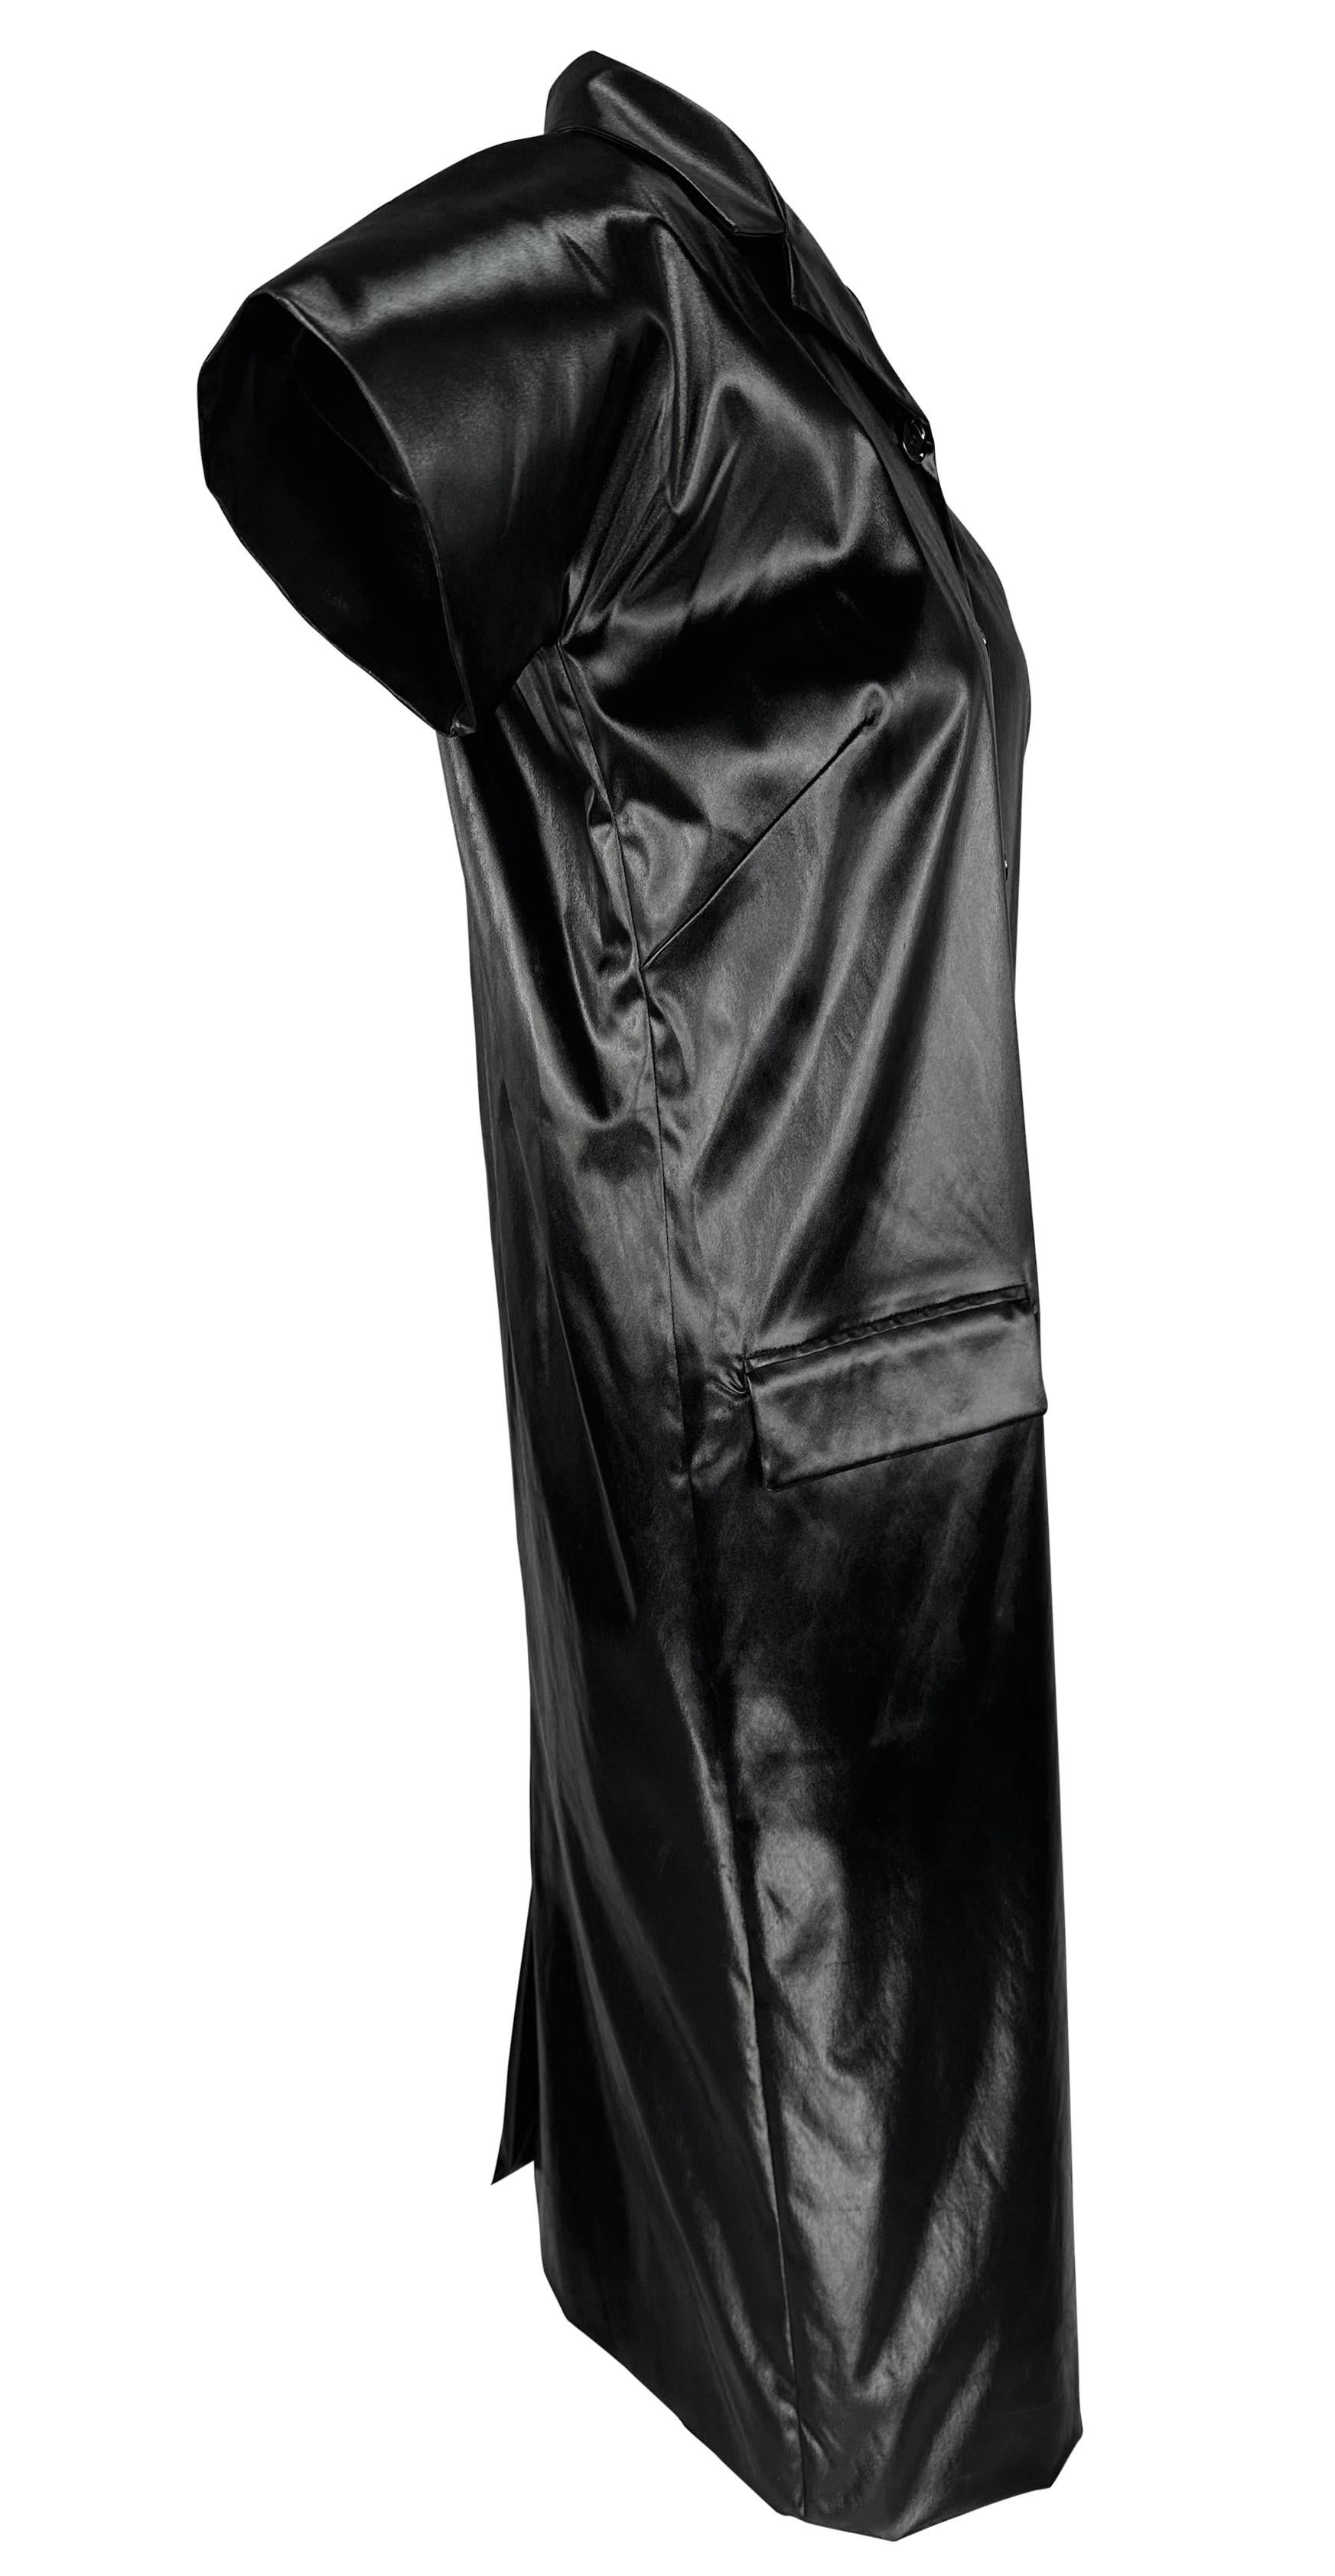 S/S 1999 Dolce & Gabbana Runway Wet Look Stretch Black Coat Dress Short Sleeve For Sale 3